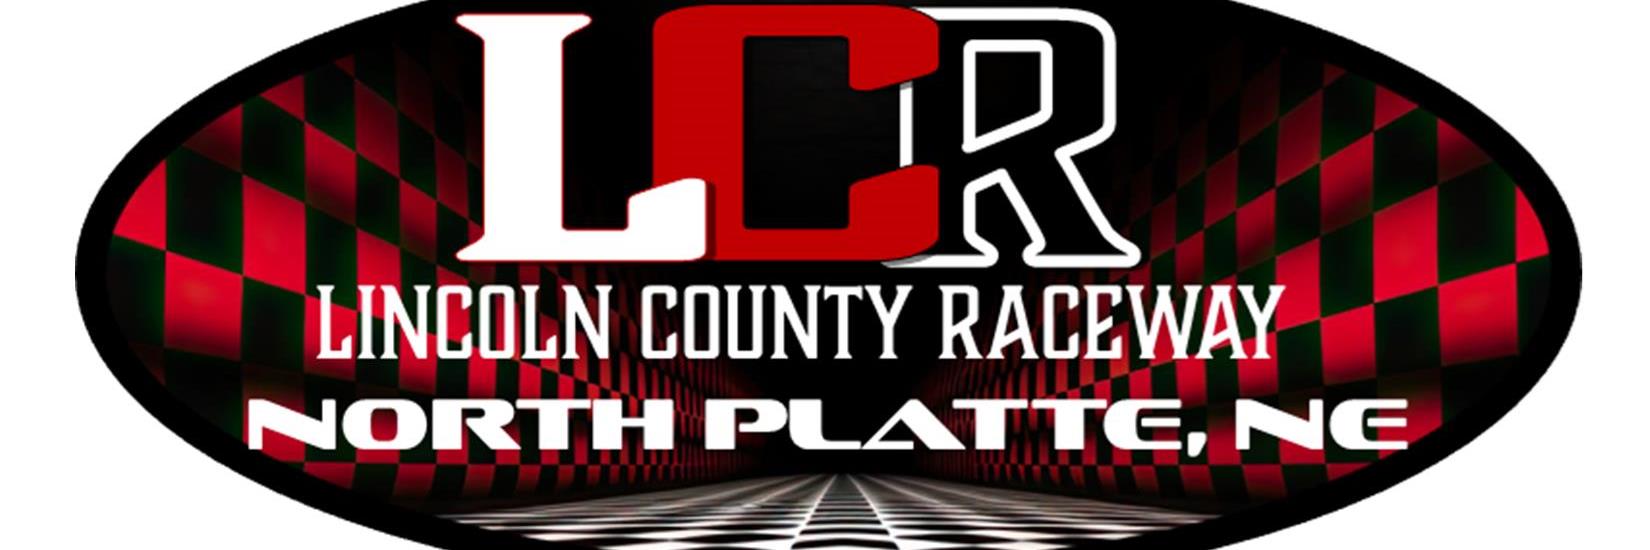 4/9/2016 - Lincoln County Raceway